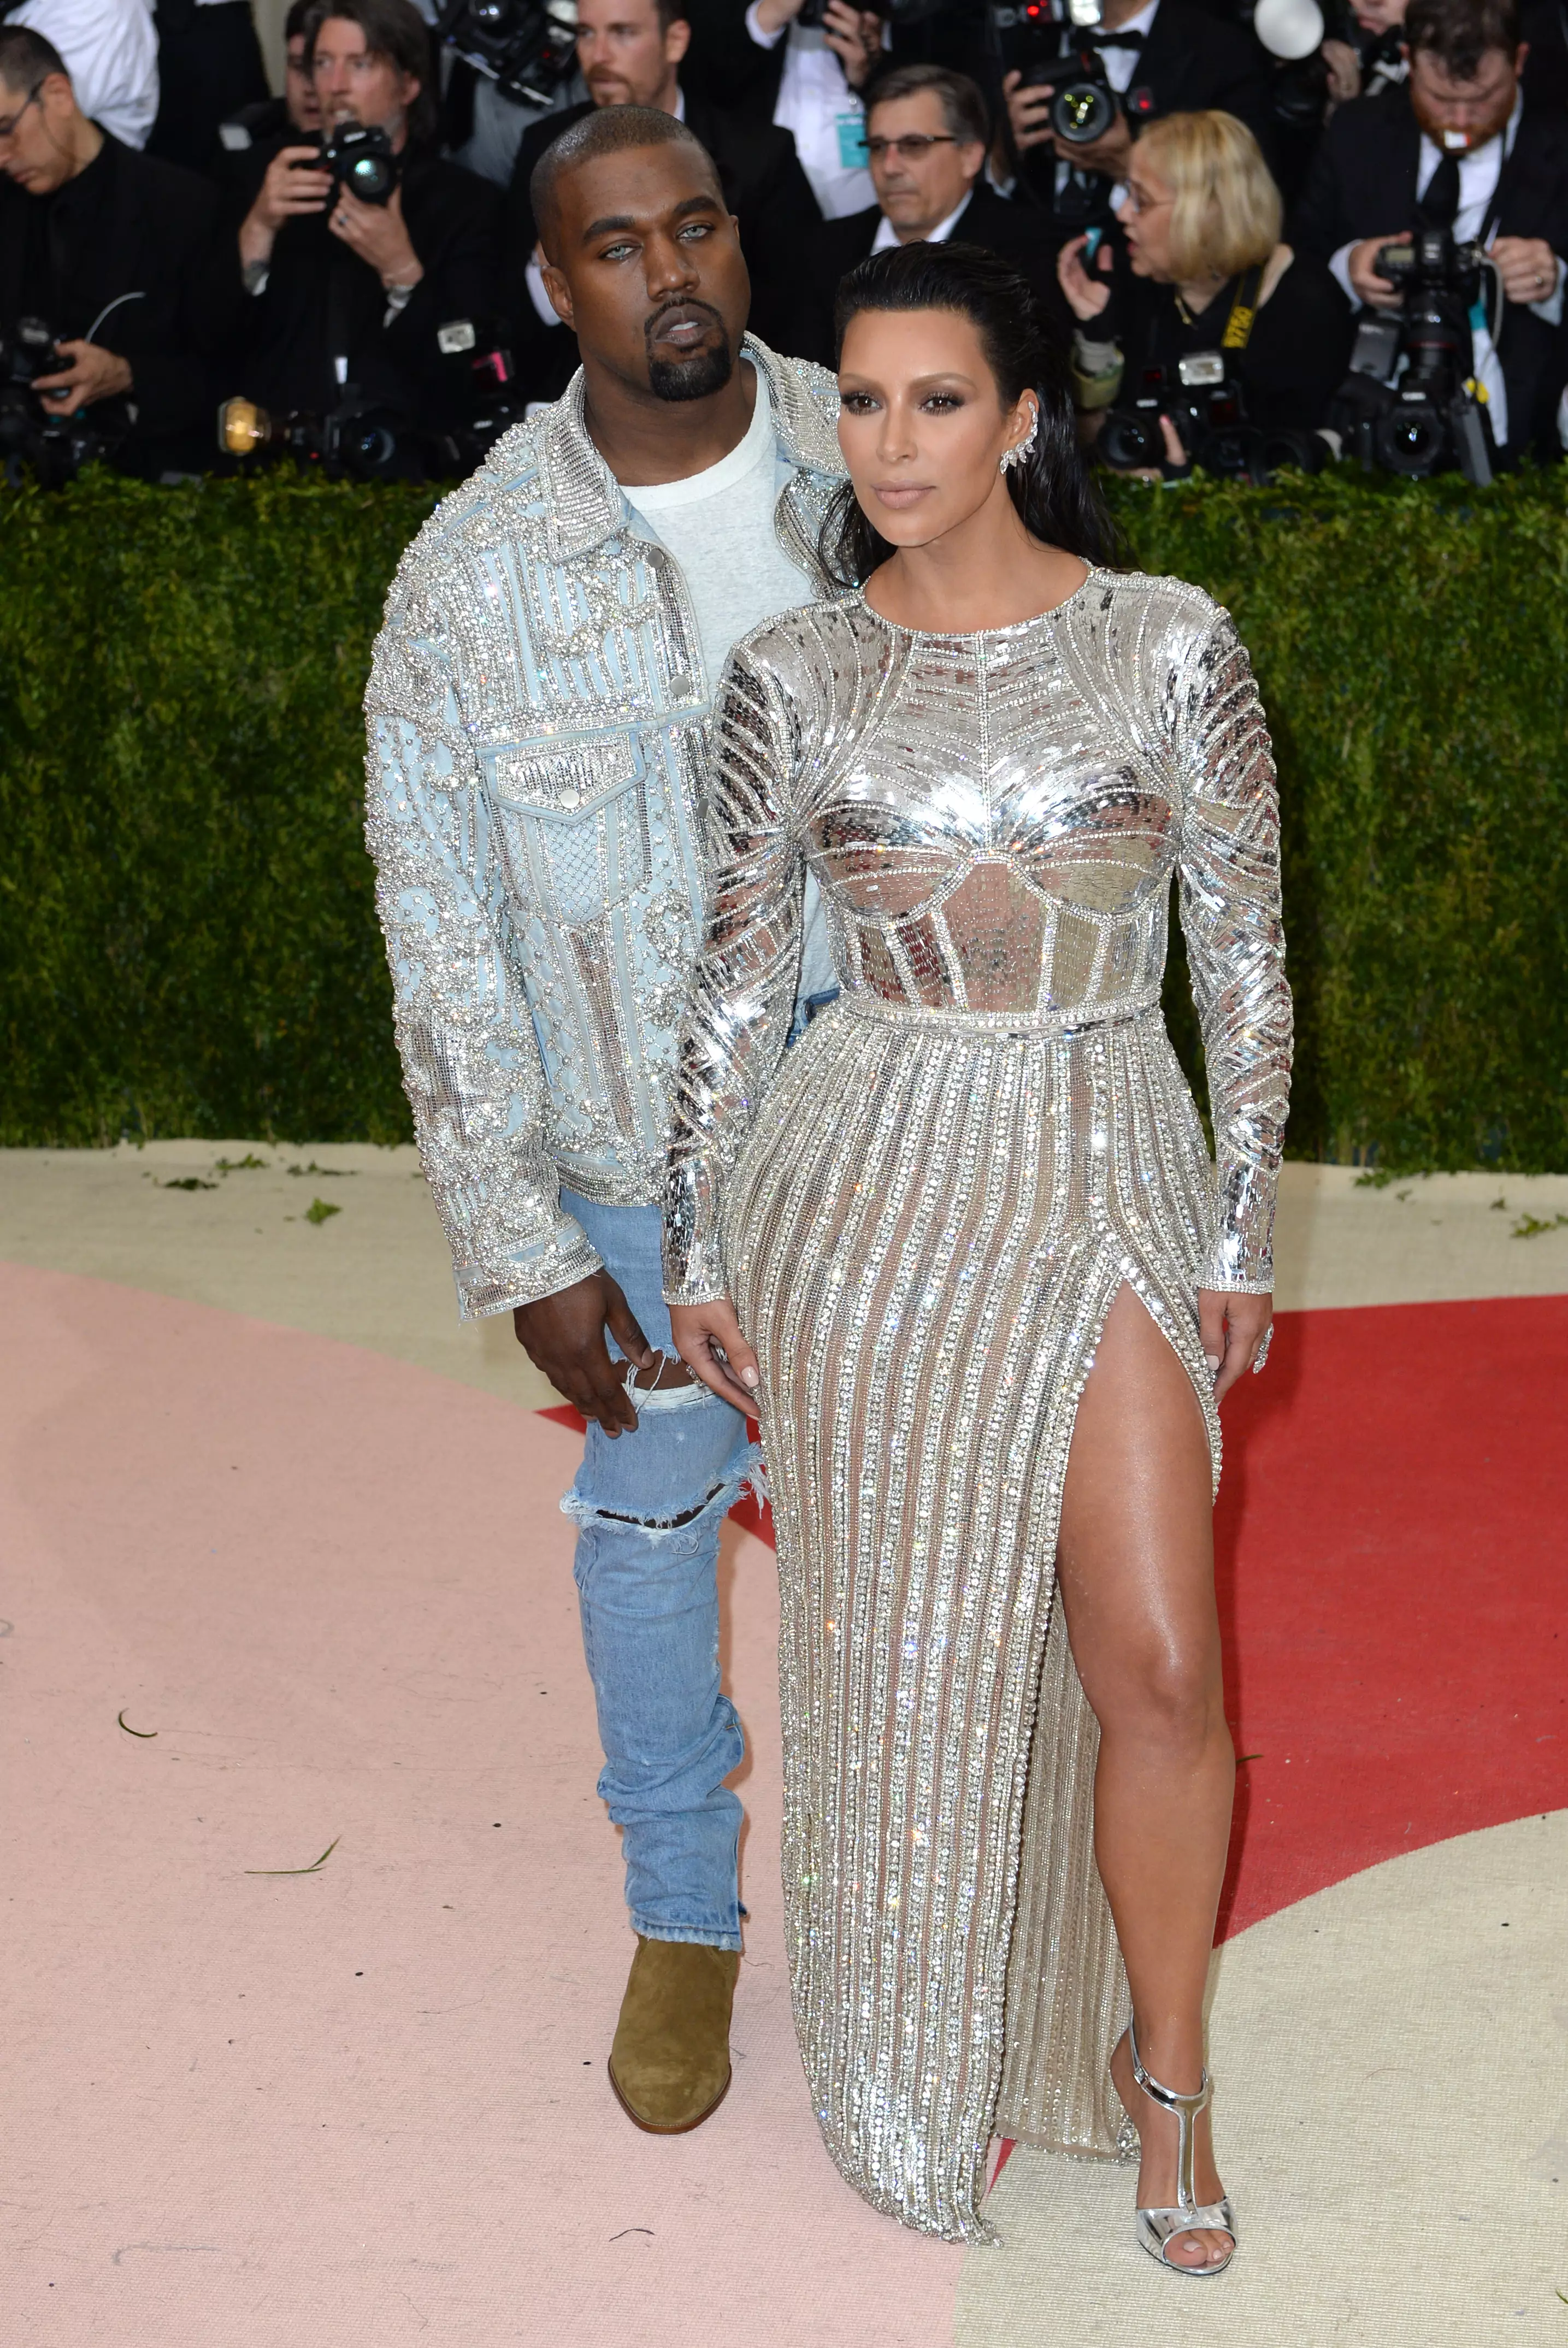 Kim Kardashian West has addressed her husband Kanye's bipolar disorder.